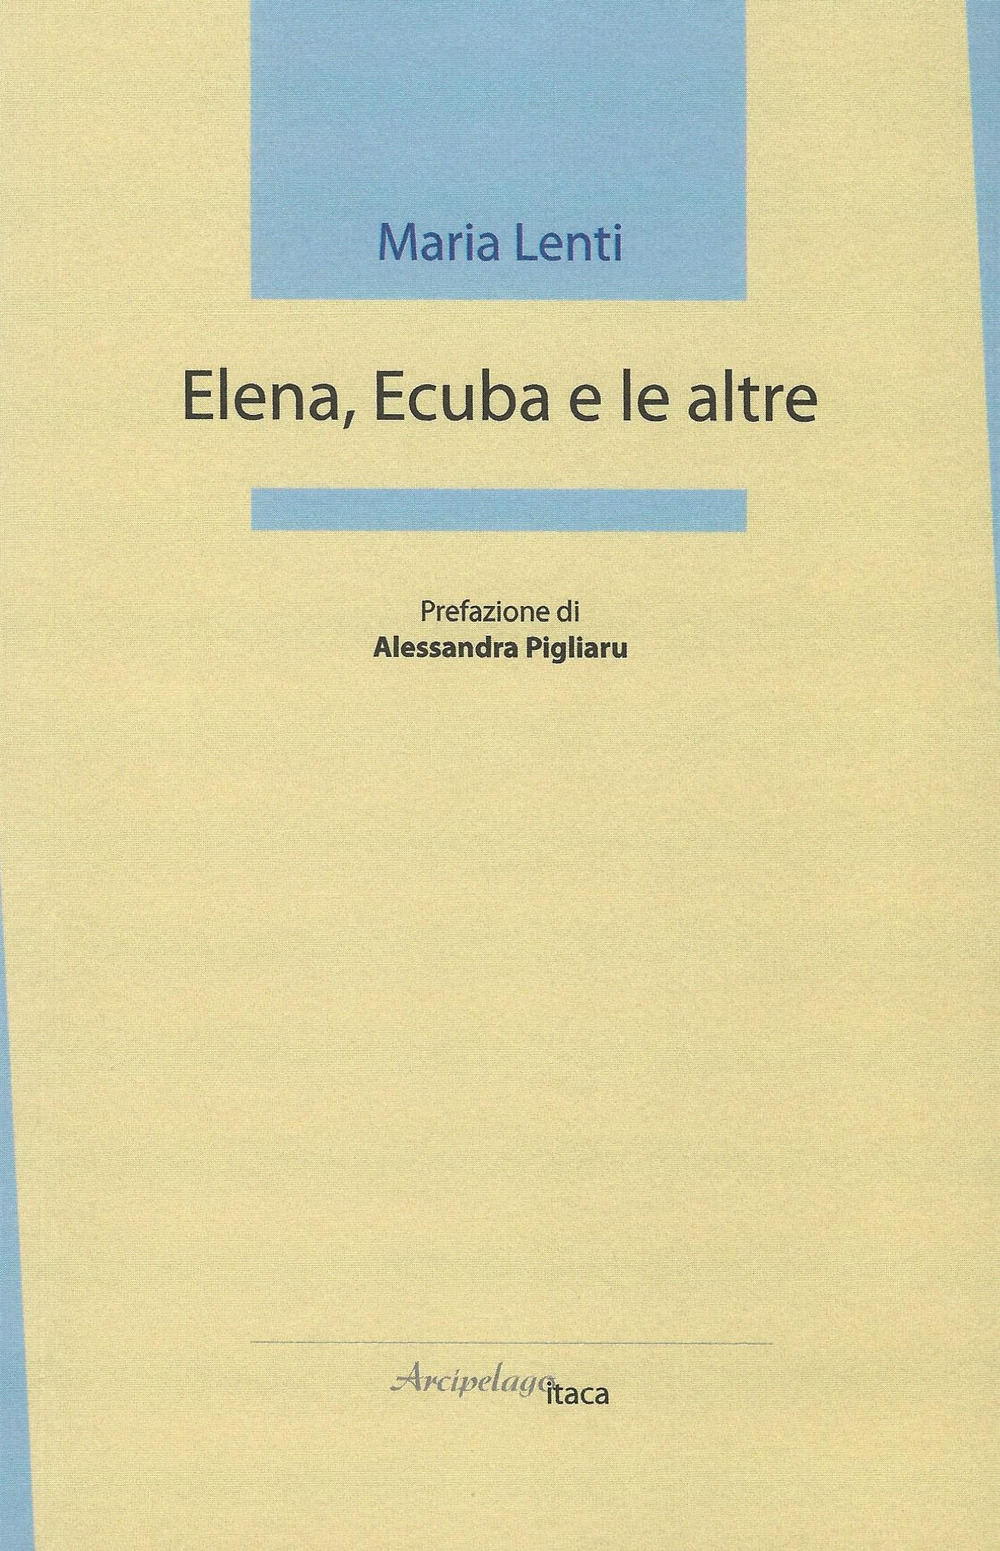 Elena, Ecuba e le altre